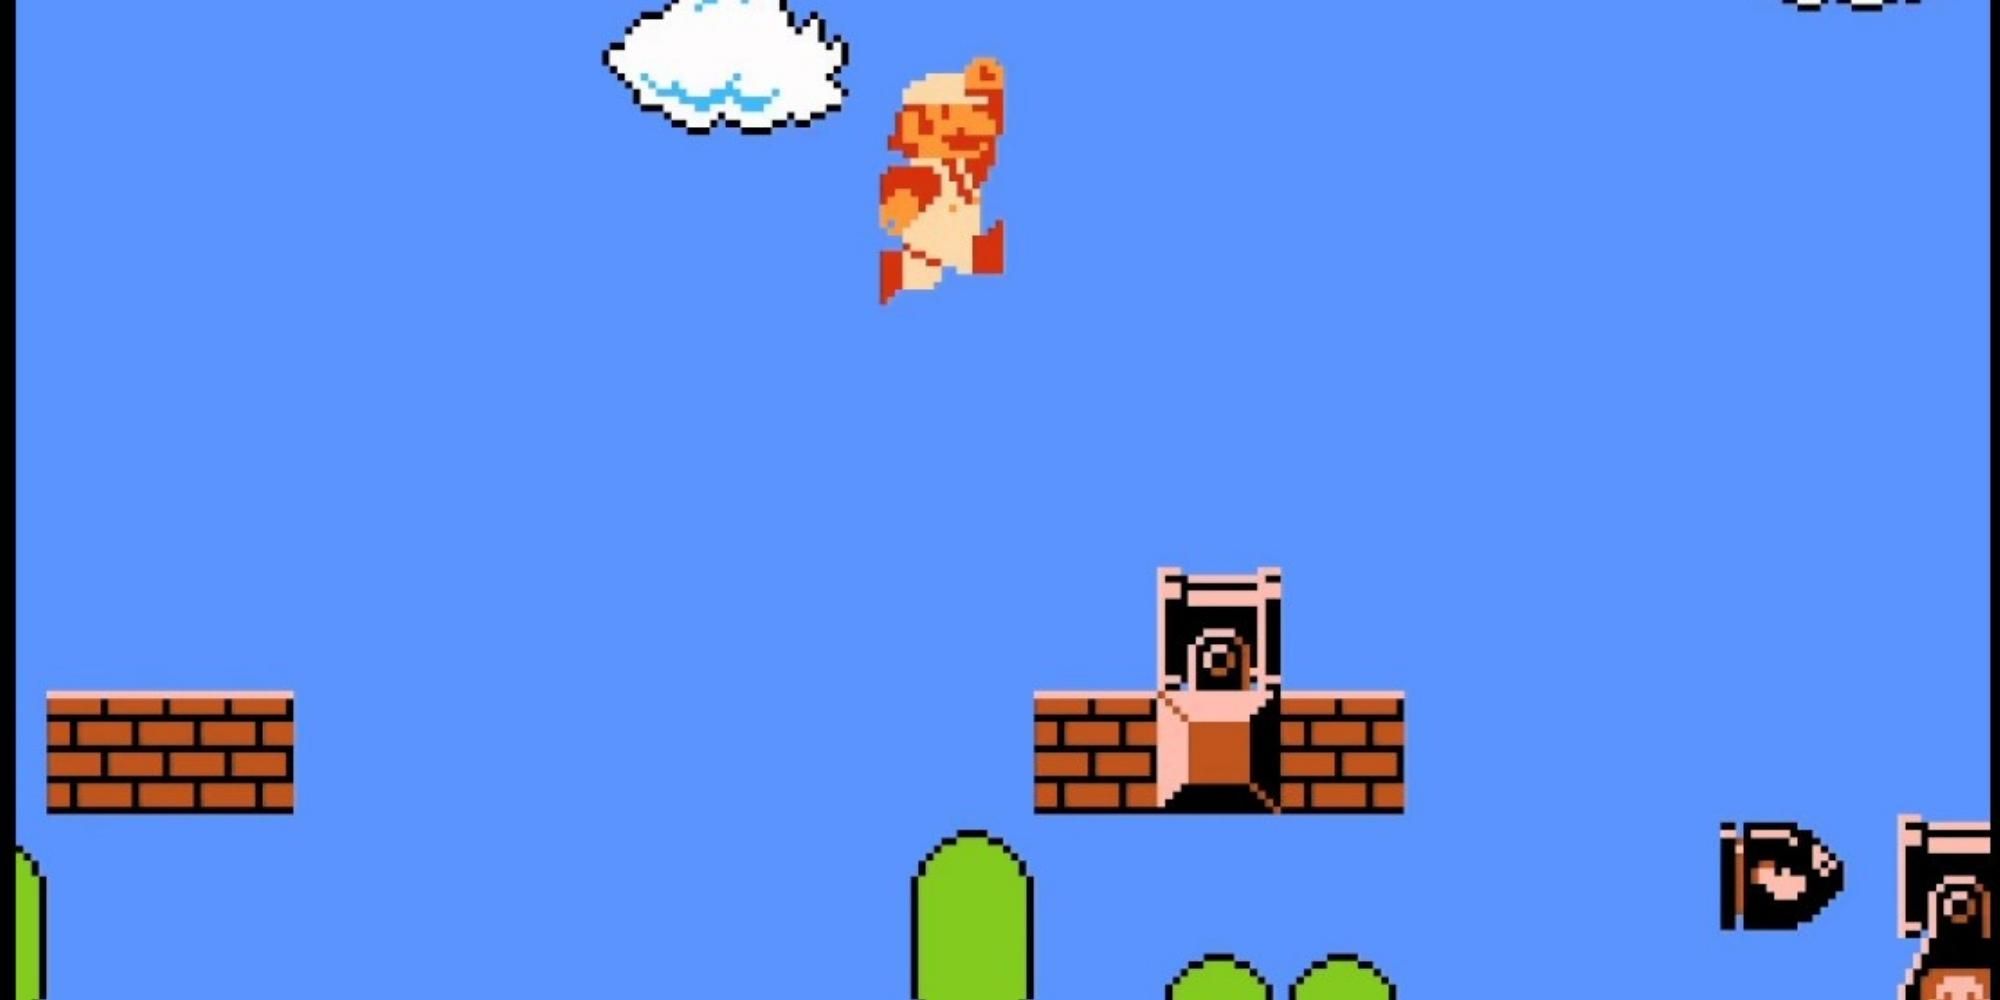 Mario jumping in Super Mario Bros. video game